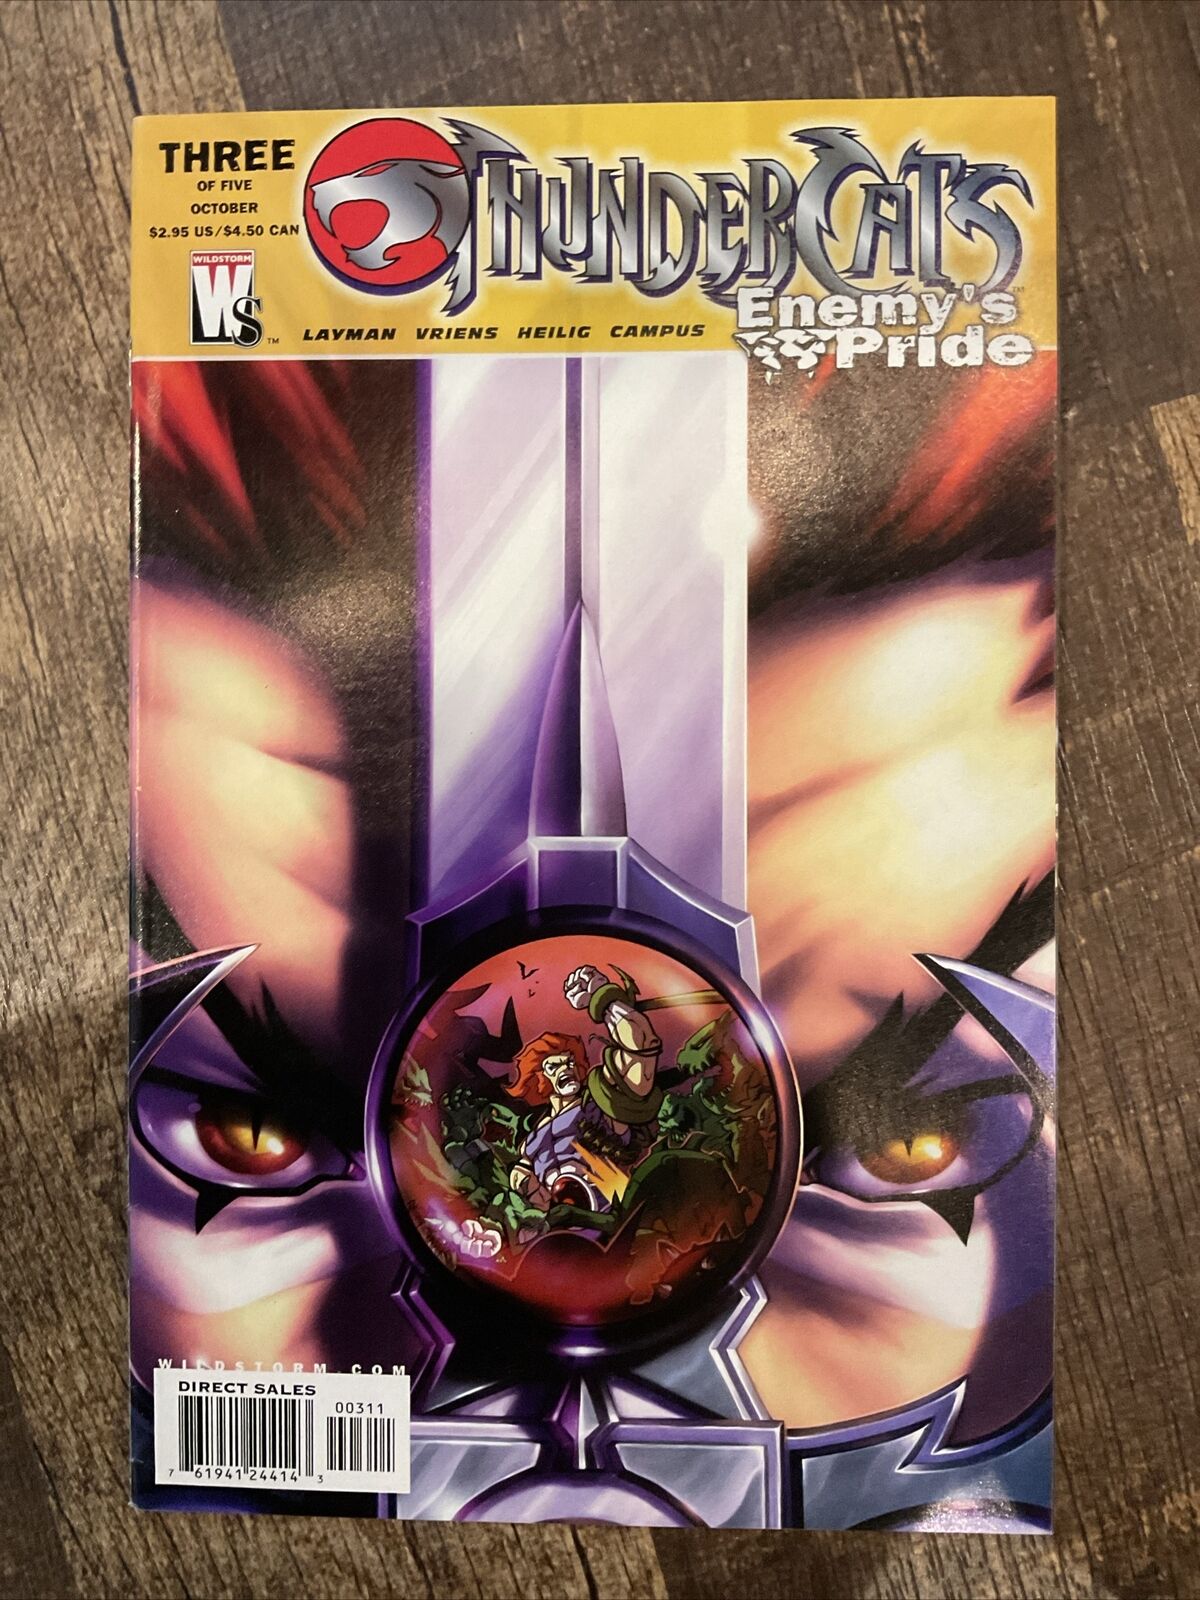 Thundercats Enemy's Pride 3 of 5 Comic Book